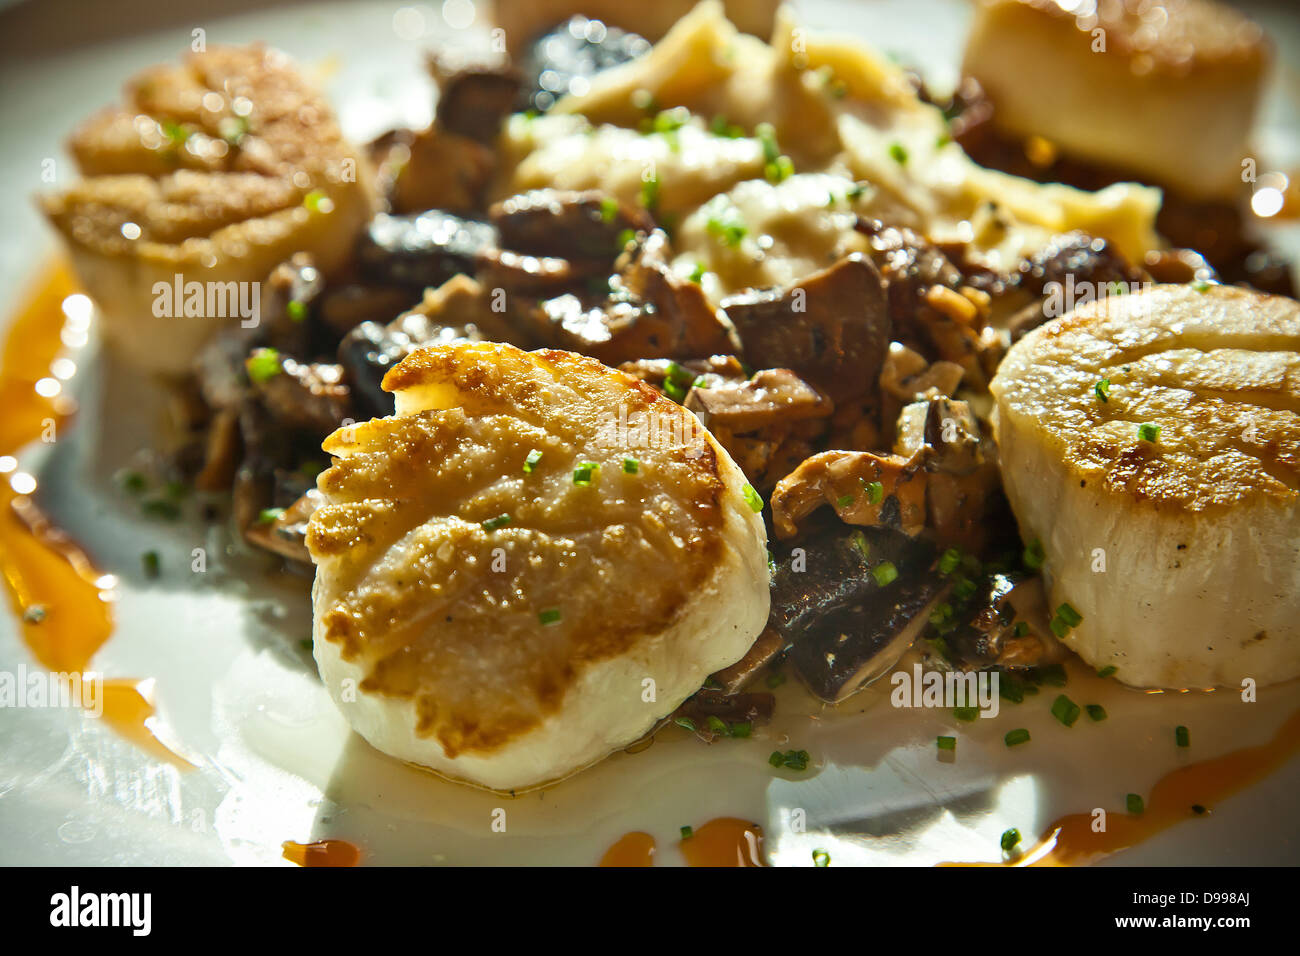 Capesante scottate su una piastra di cena con purè di patate Foto Stock